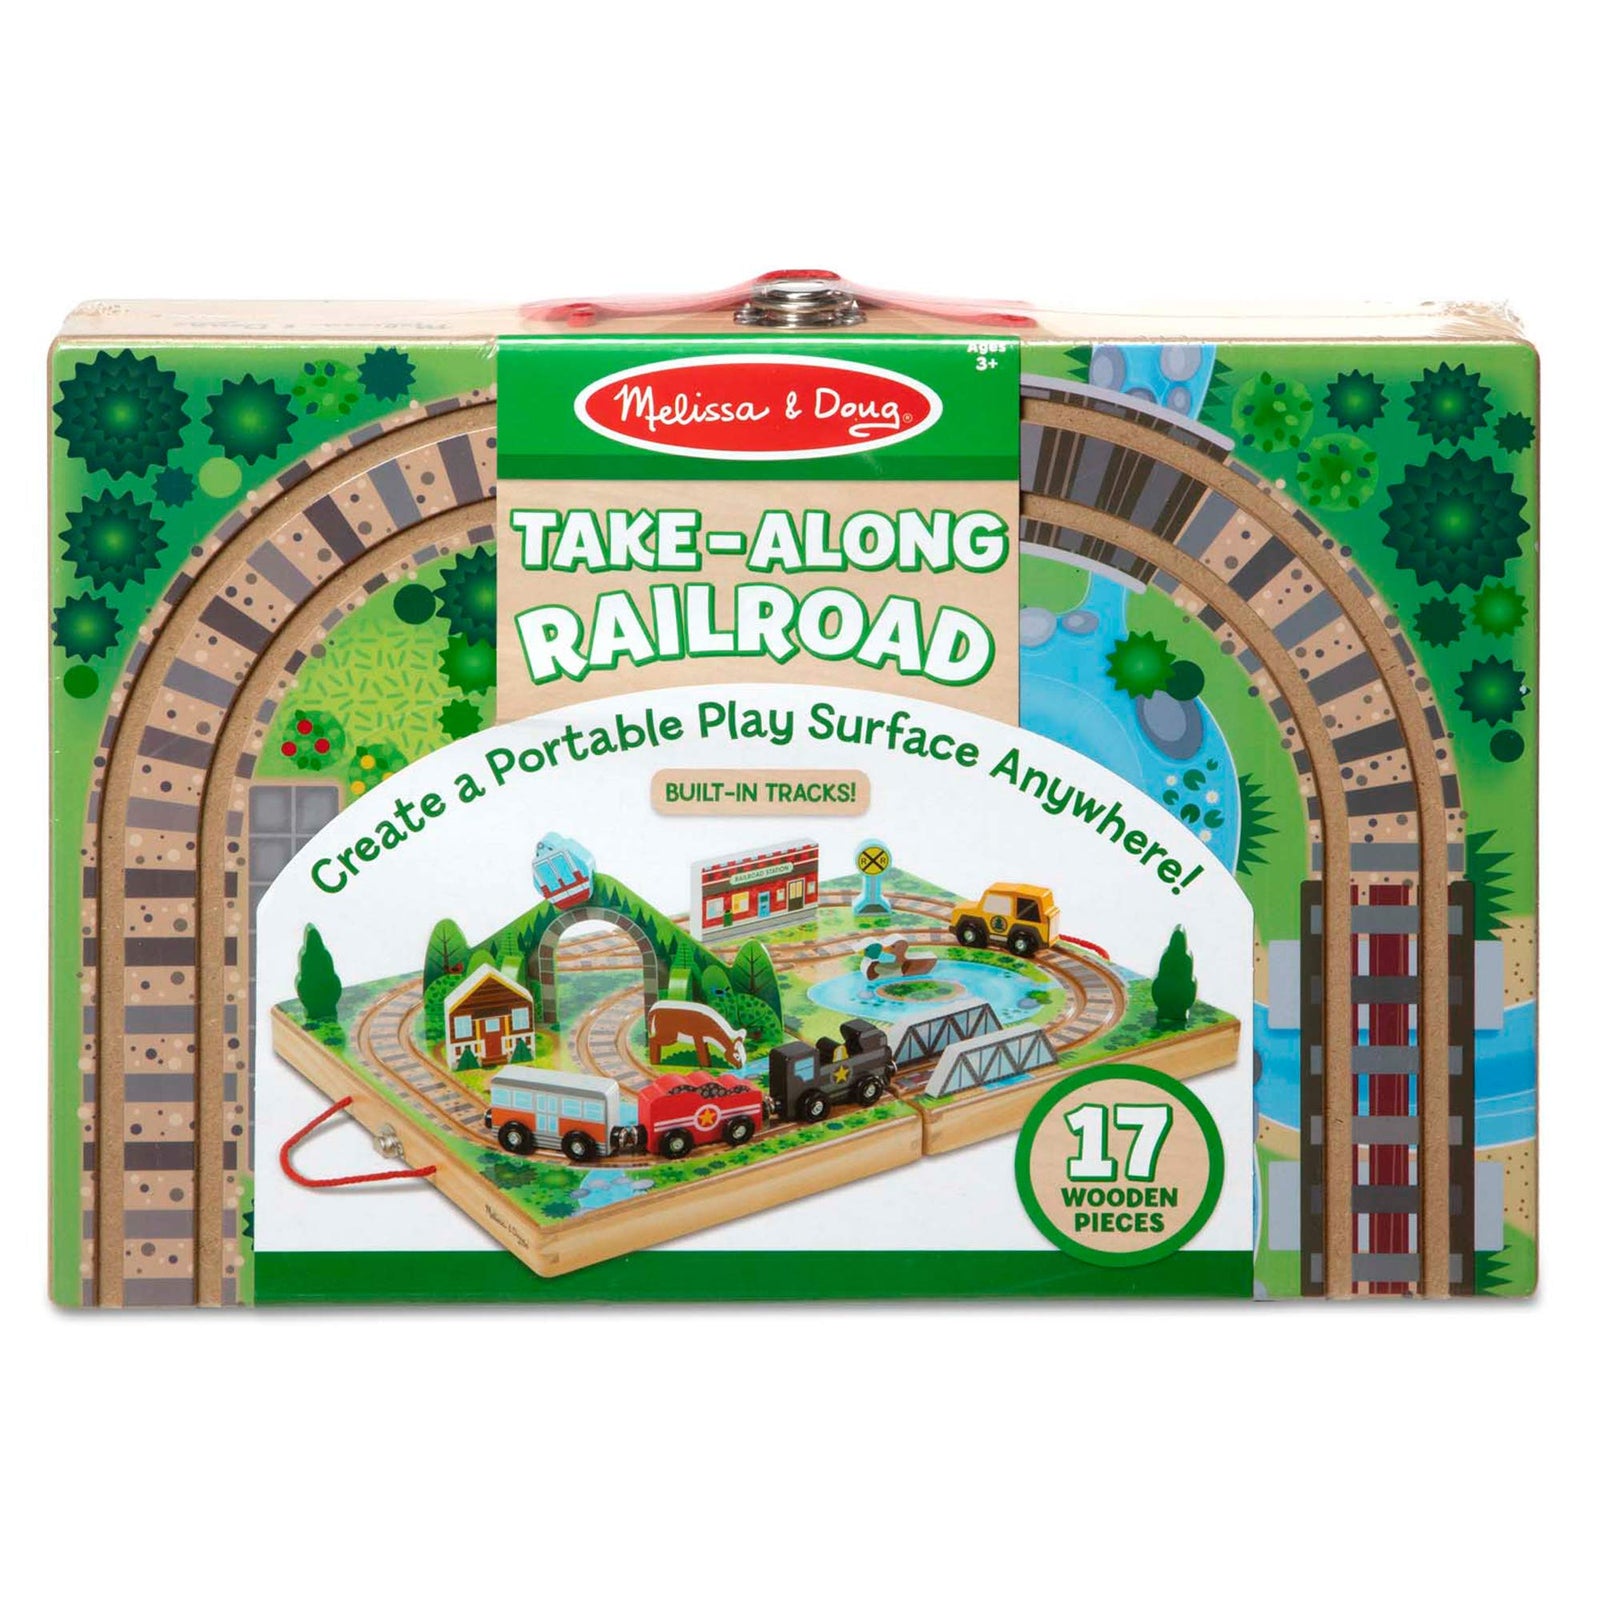 Melissa & Doug 17-Piece Wooden Take-Along Tabletop Railroad, 3 Trains, Truck,Play Pieces, Bridge